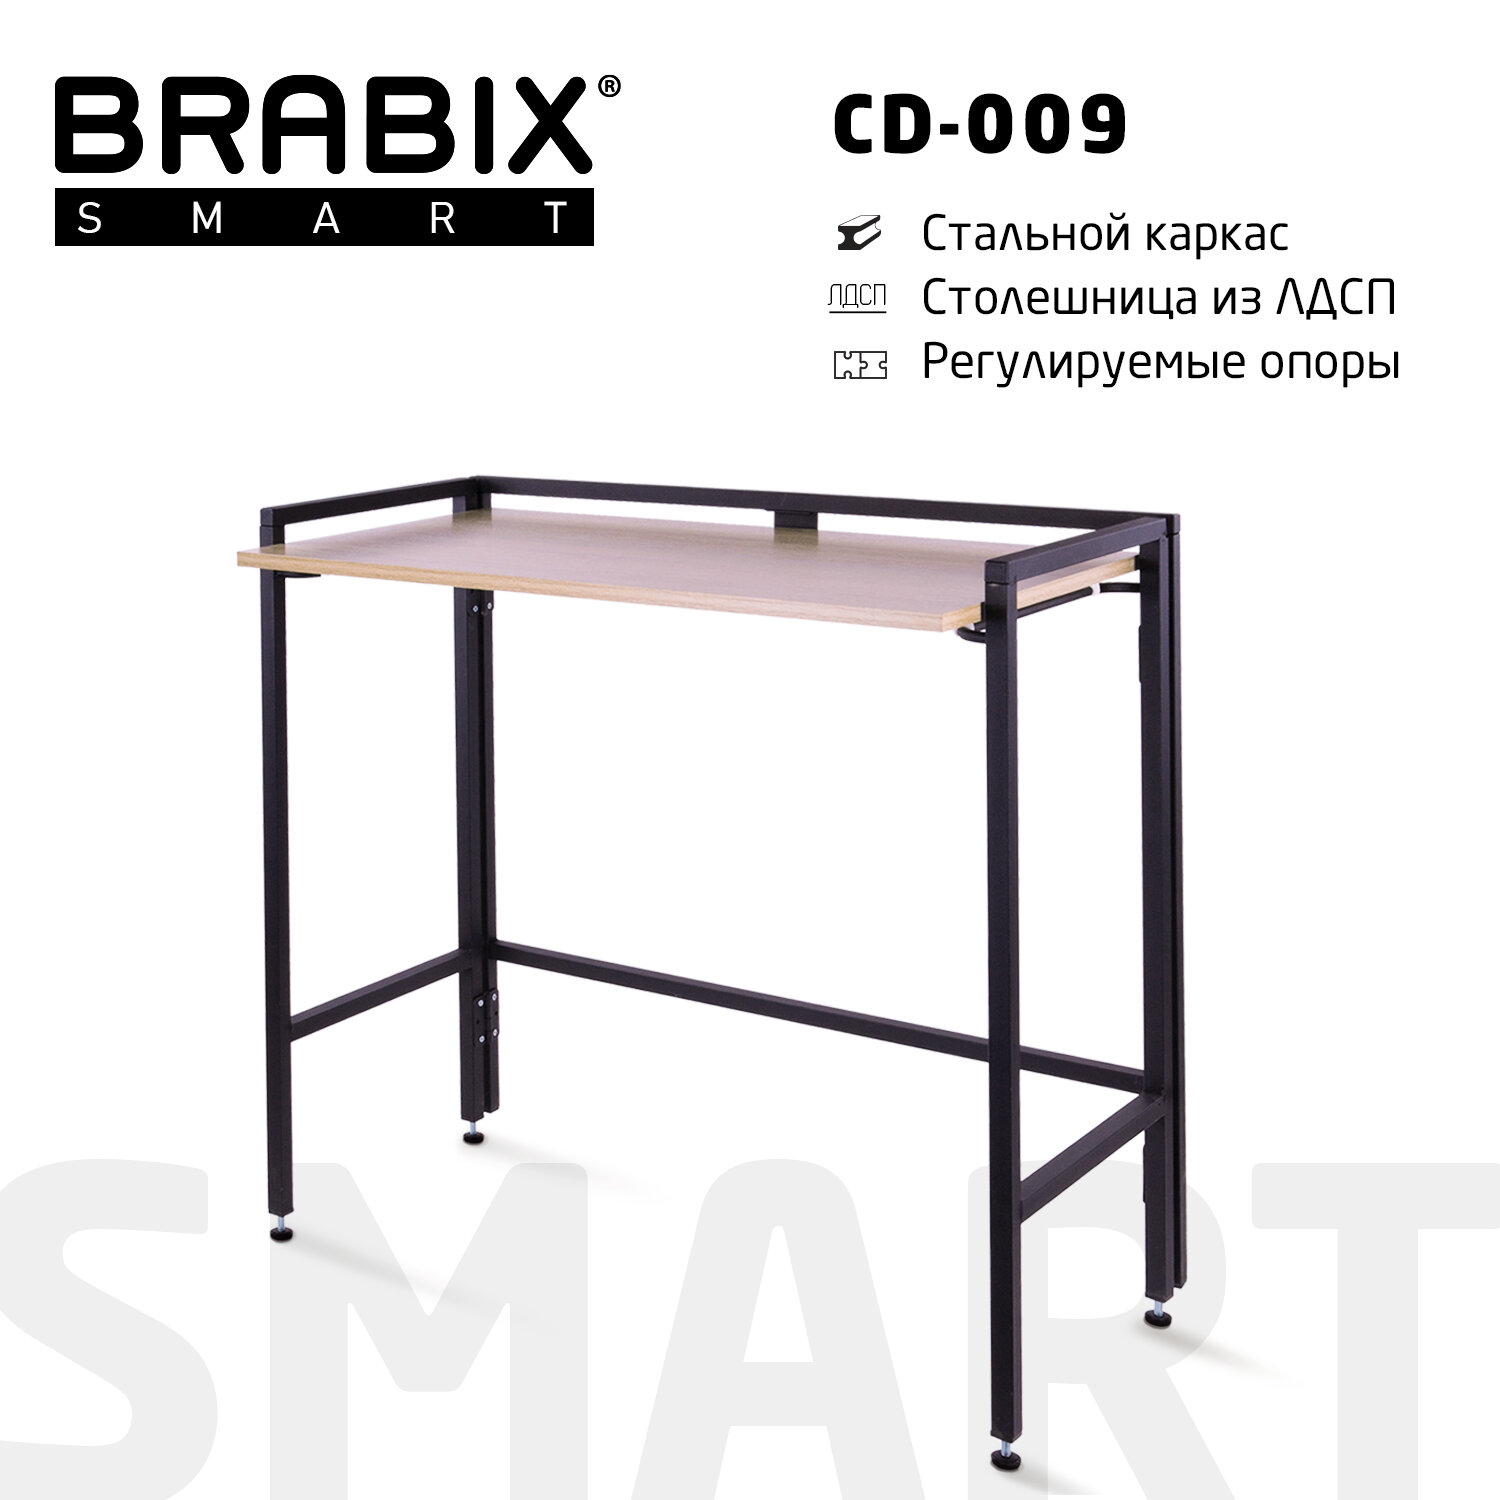  BRABIX Smart CD-009 641874